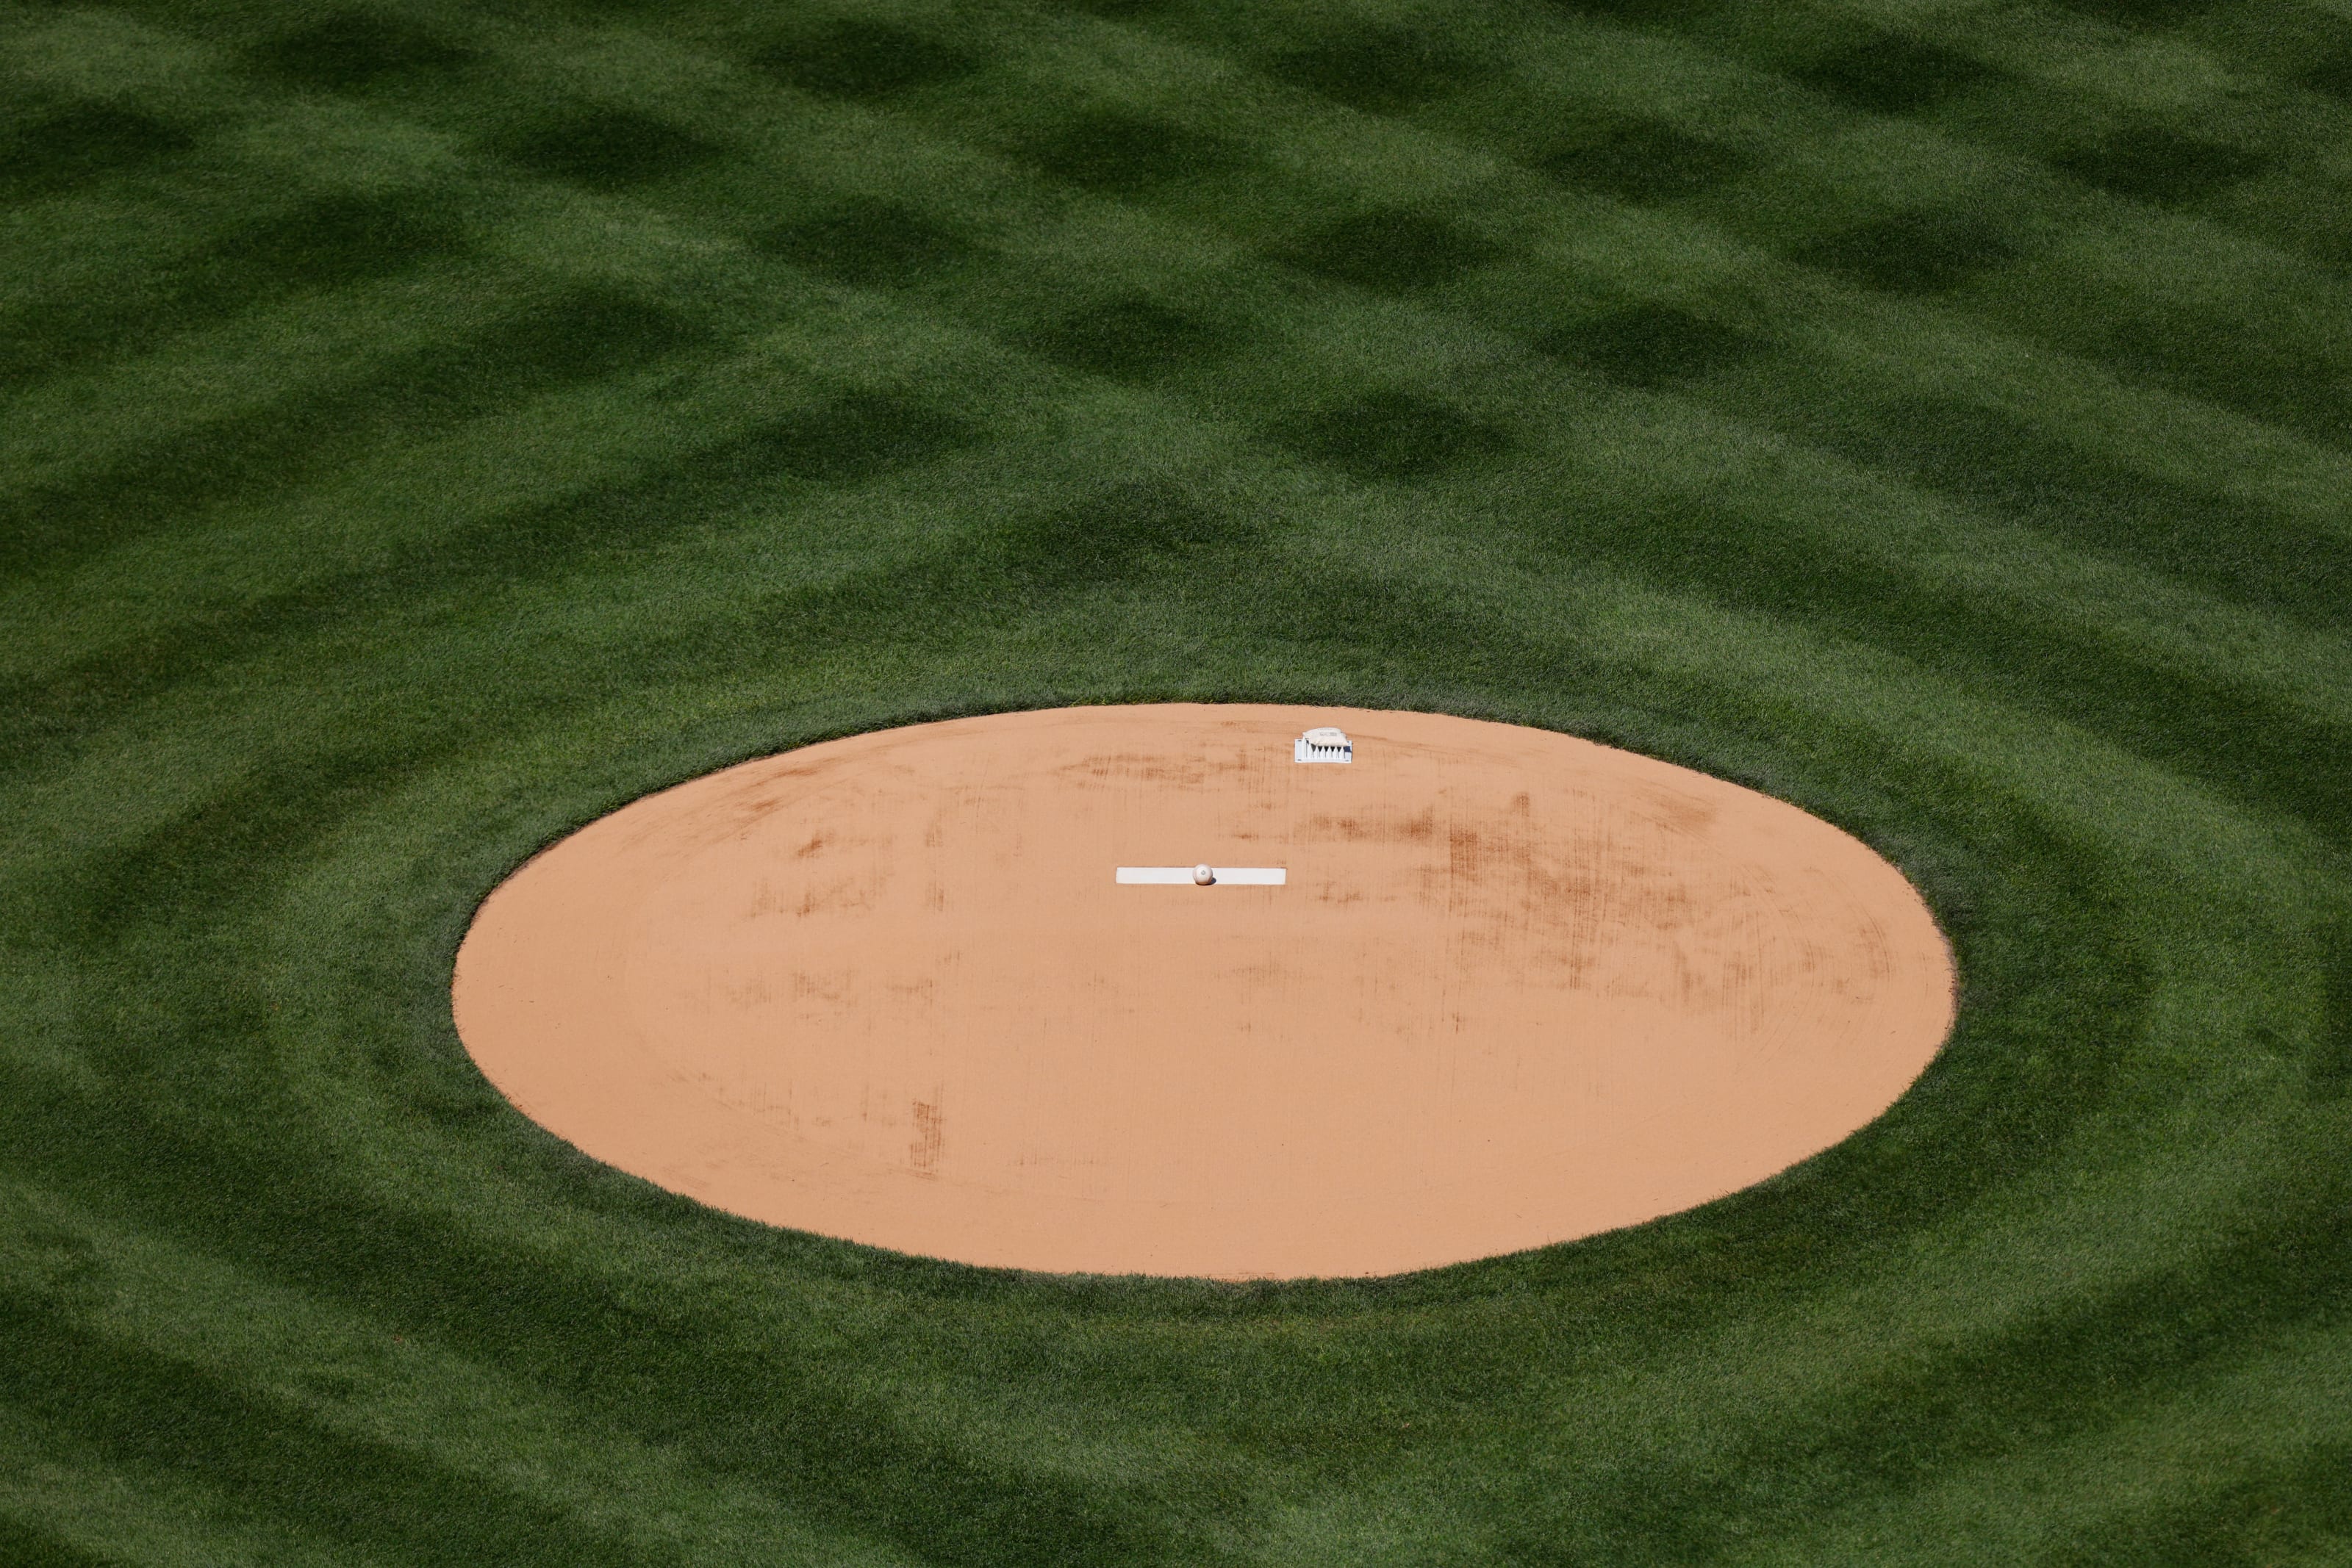 Salt Lake City group hopes to gain MLB expansion team